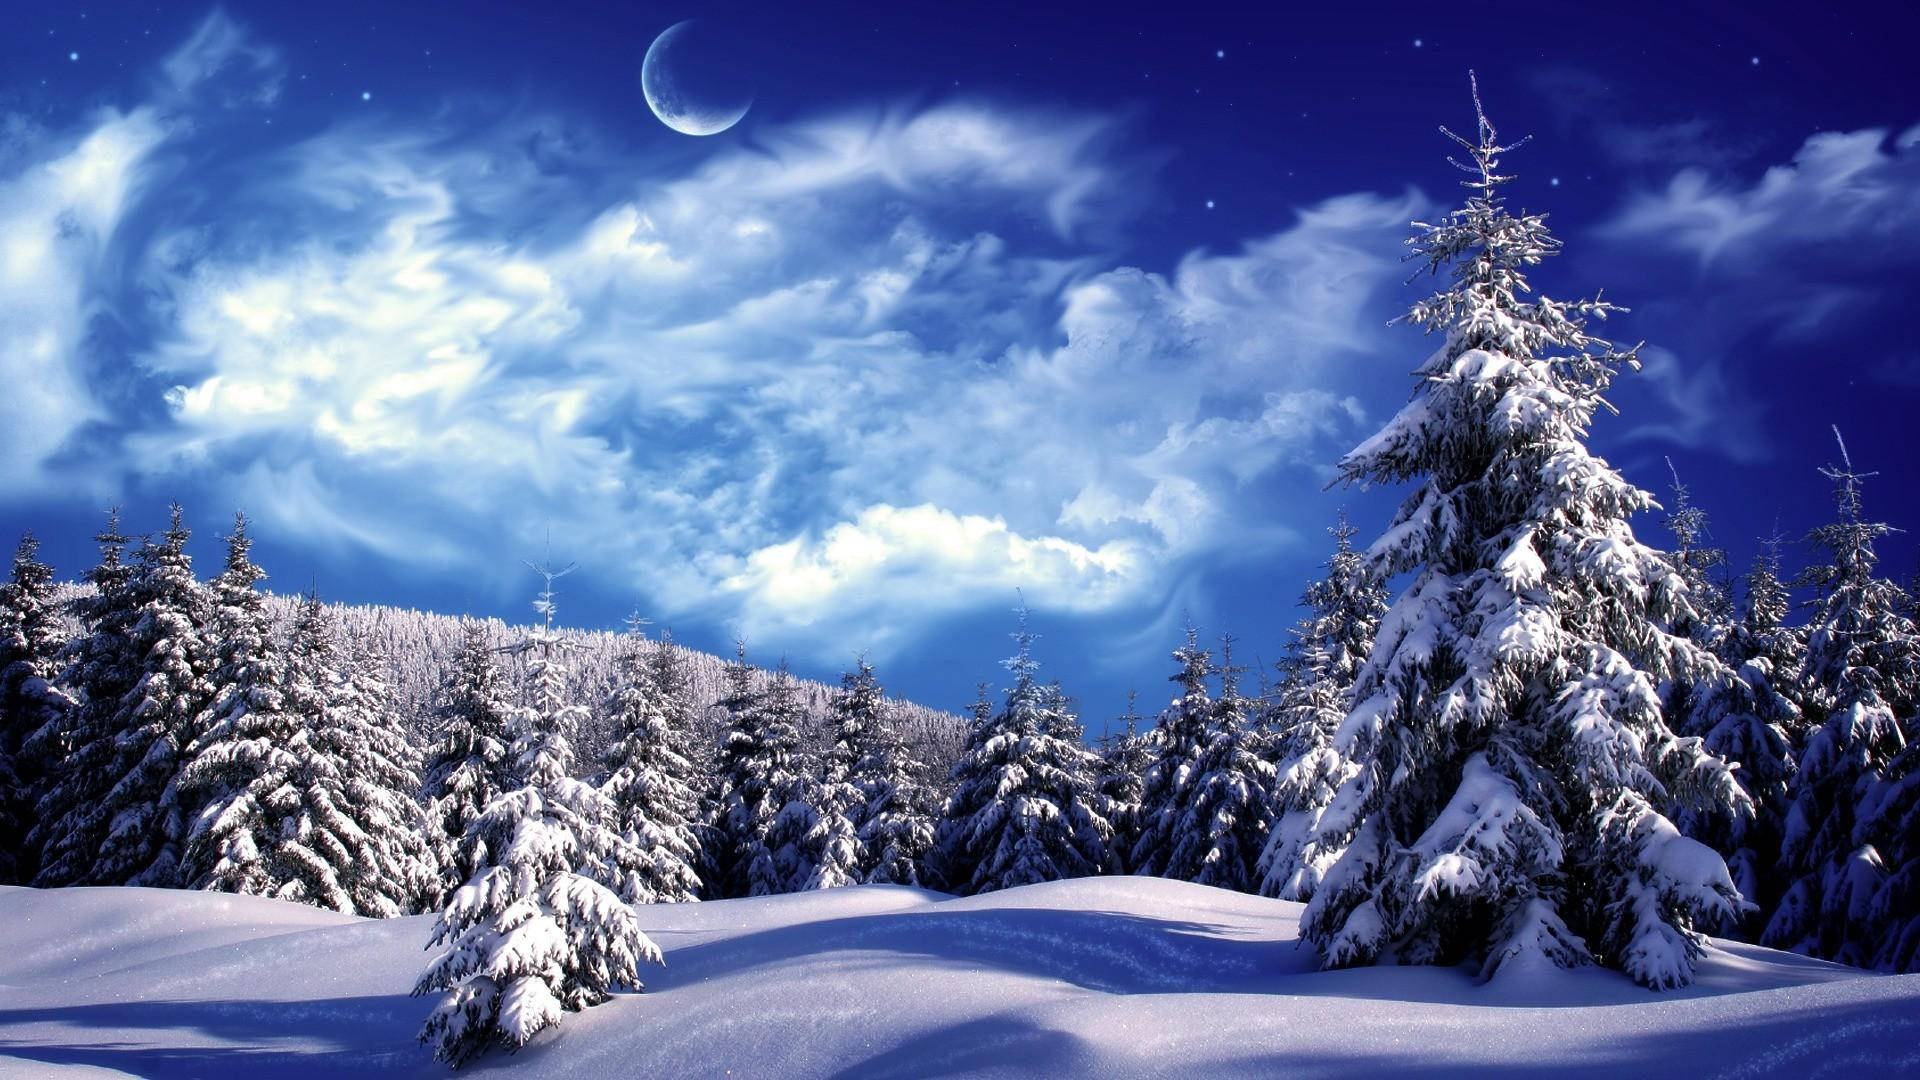 Windows Winter Pine Trees And Moon